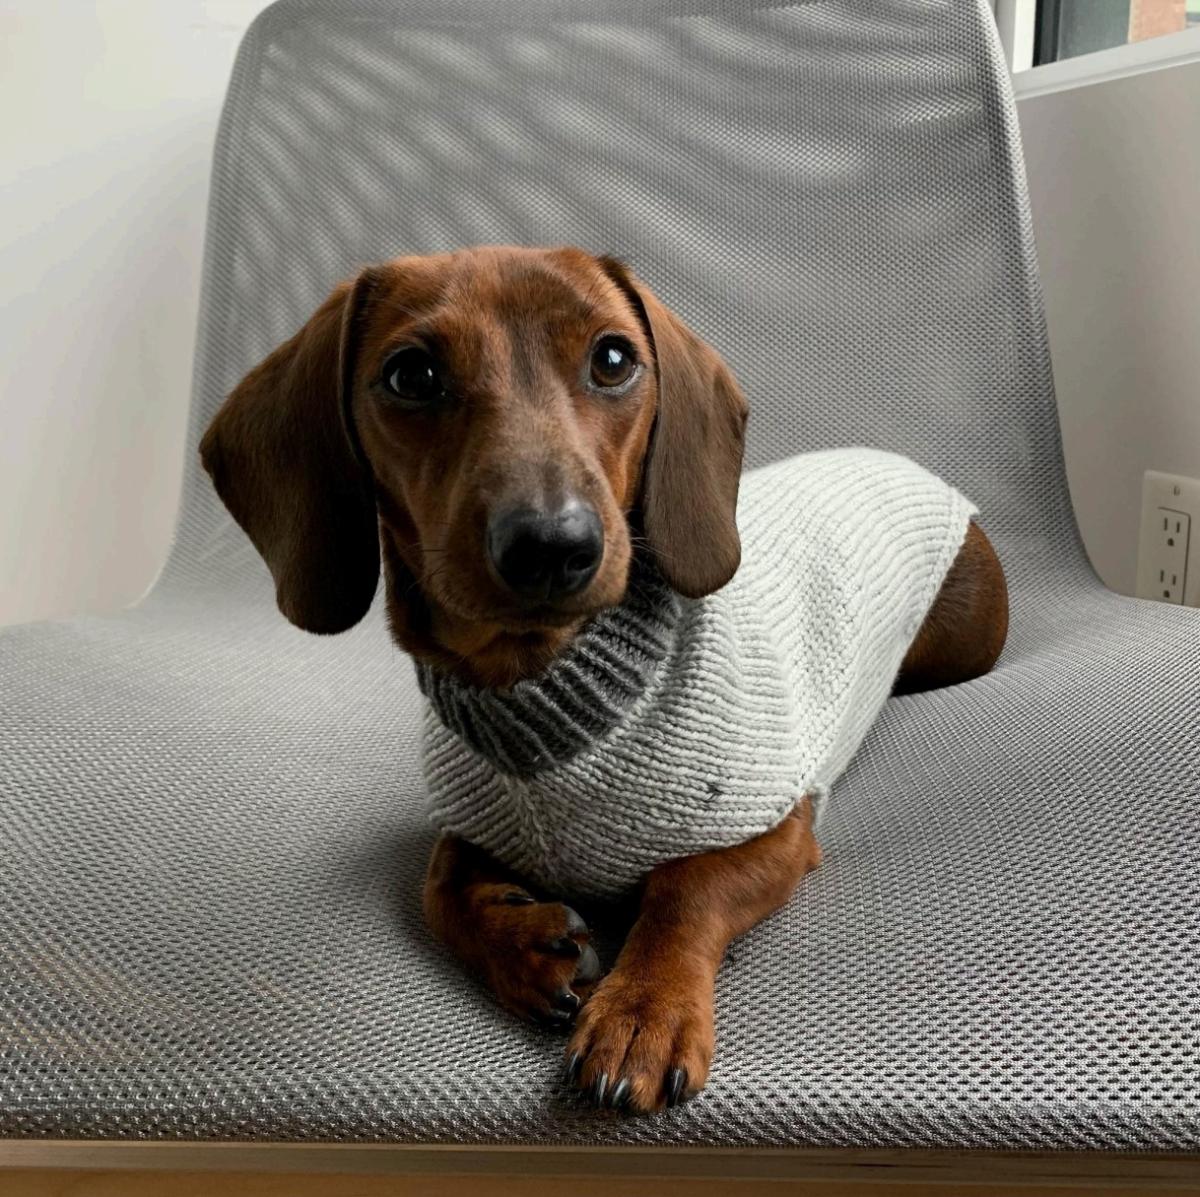 The Edinburgh Seamless Dog Sweater